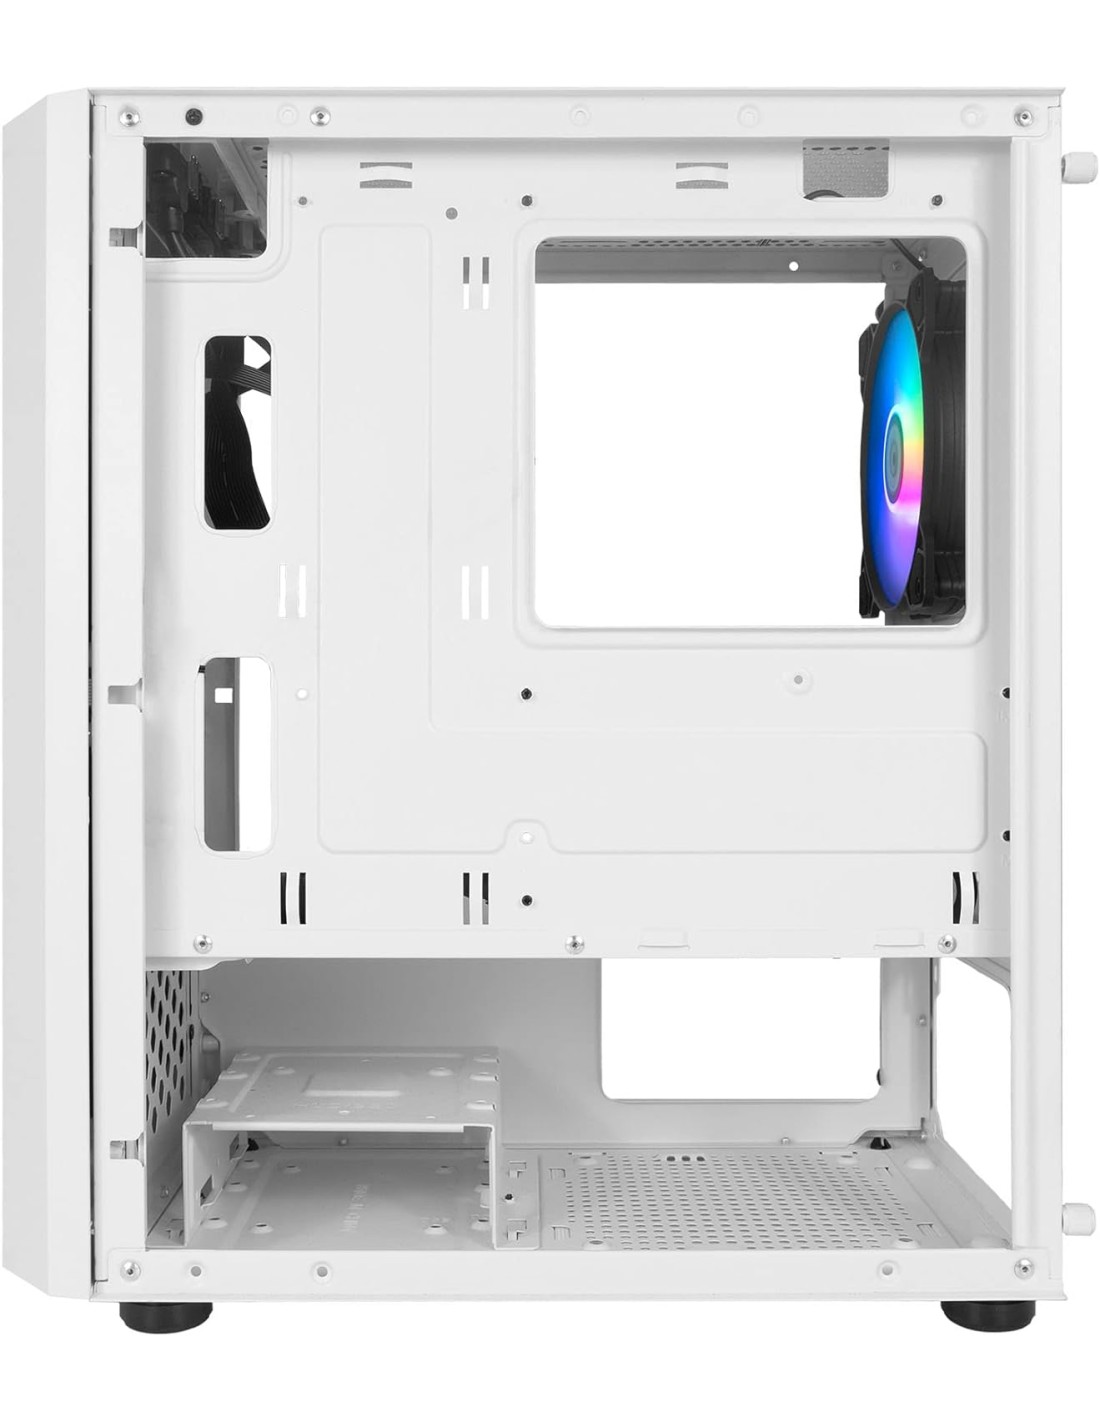 Nuwo Blitz R25 Case Micro-ATX Bianco 3 Ventole RGB Rainbow